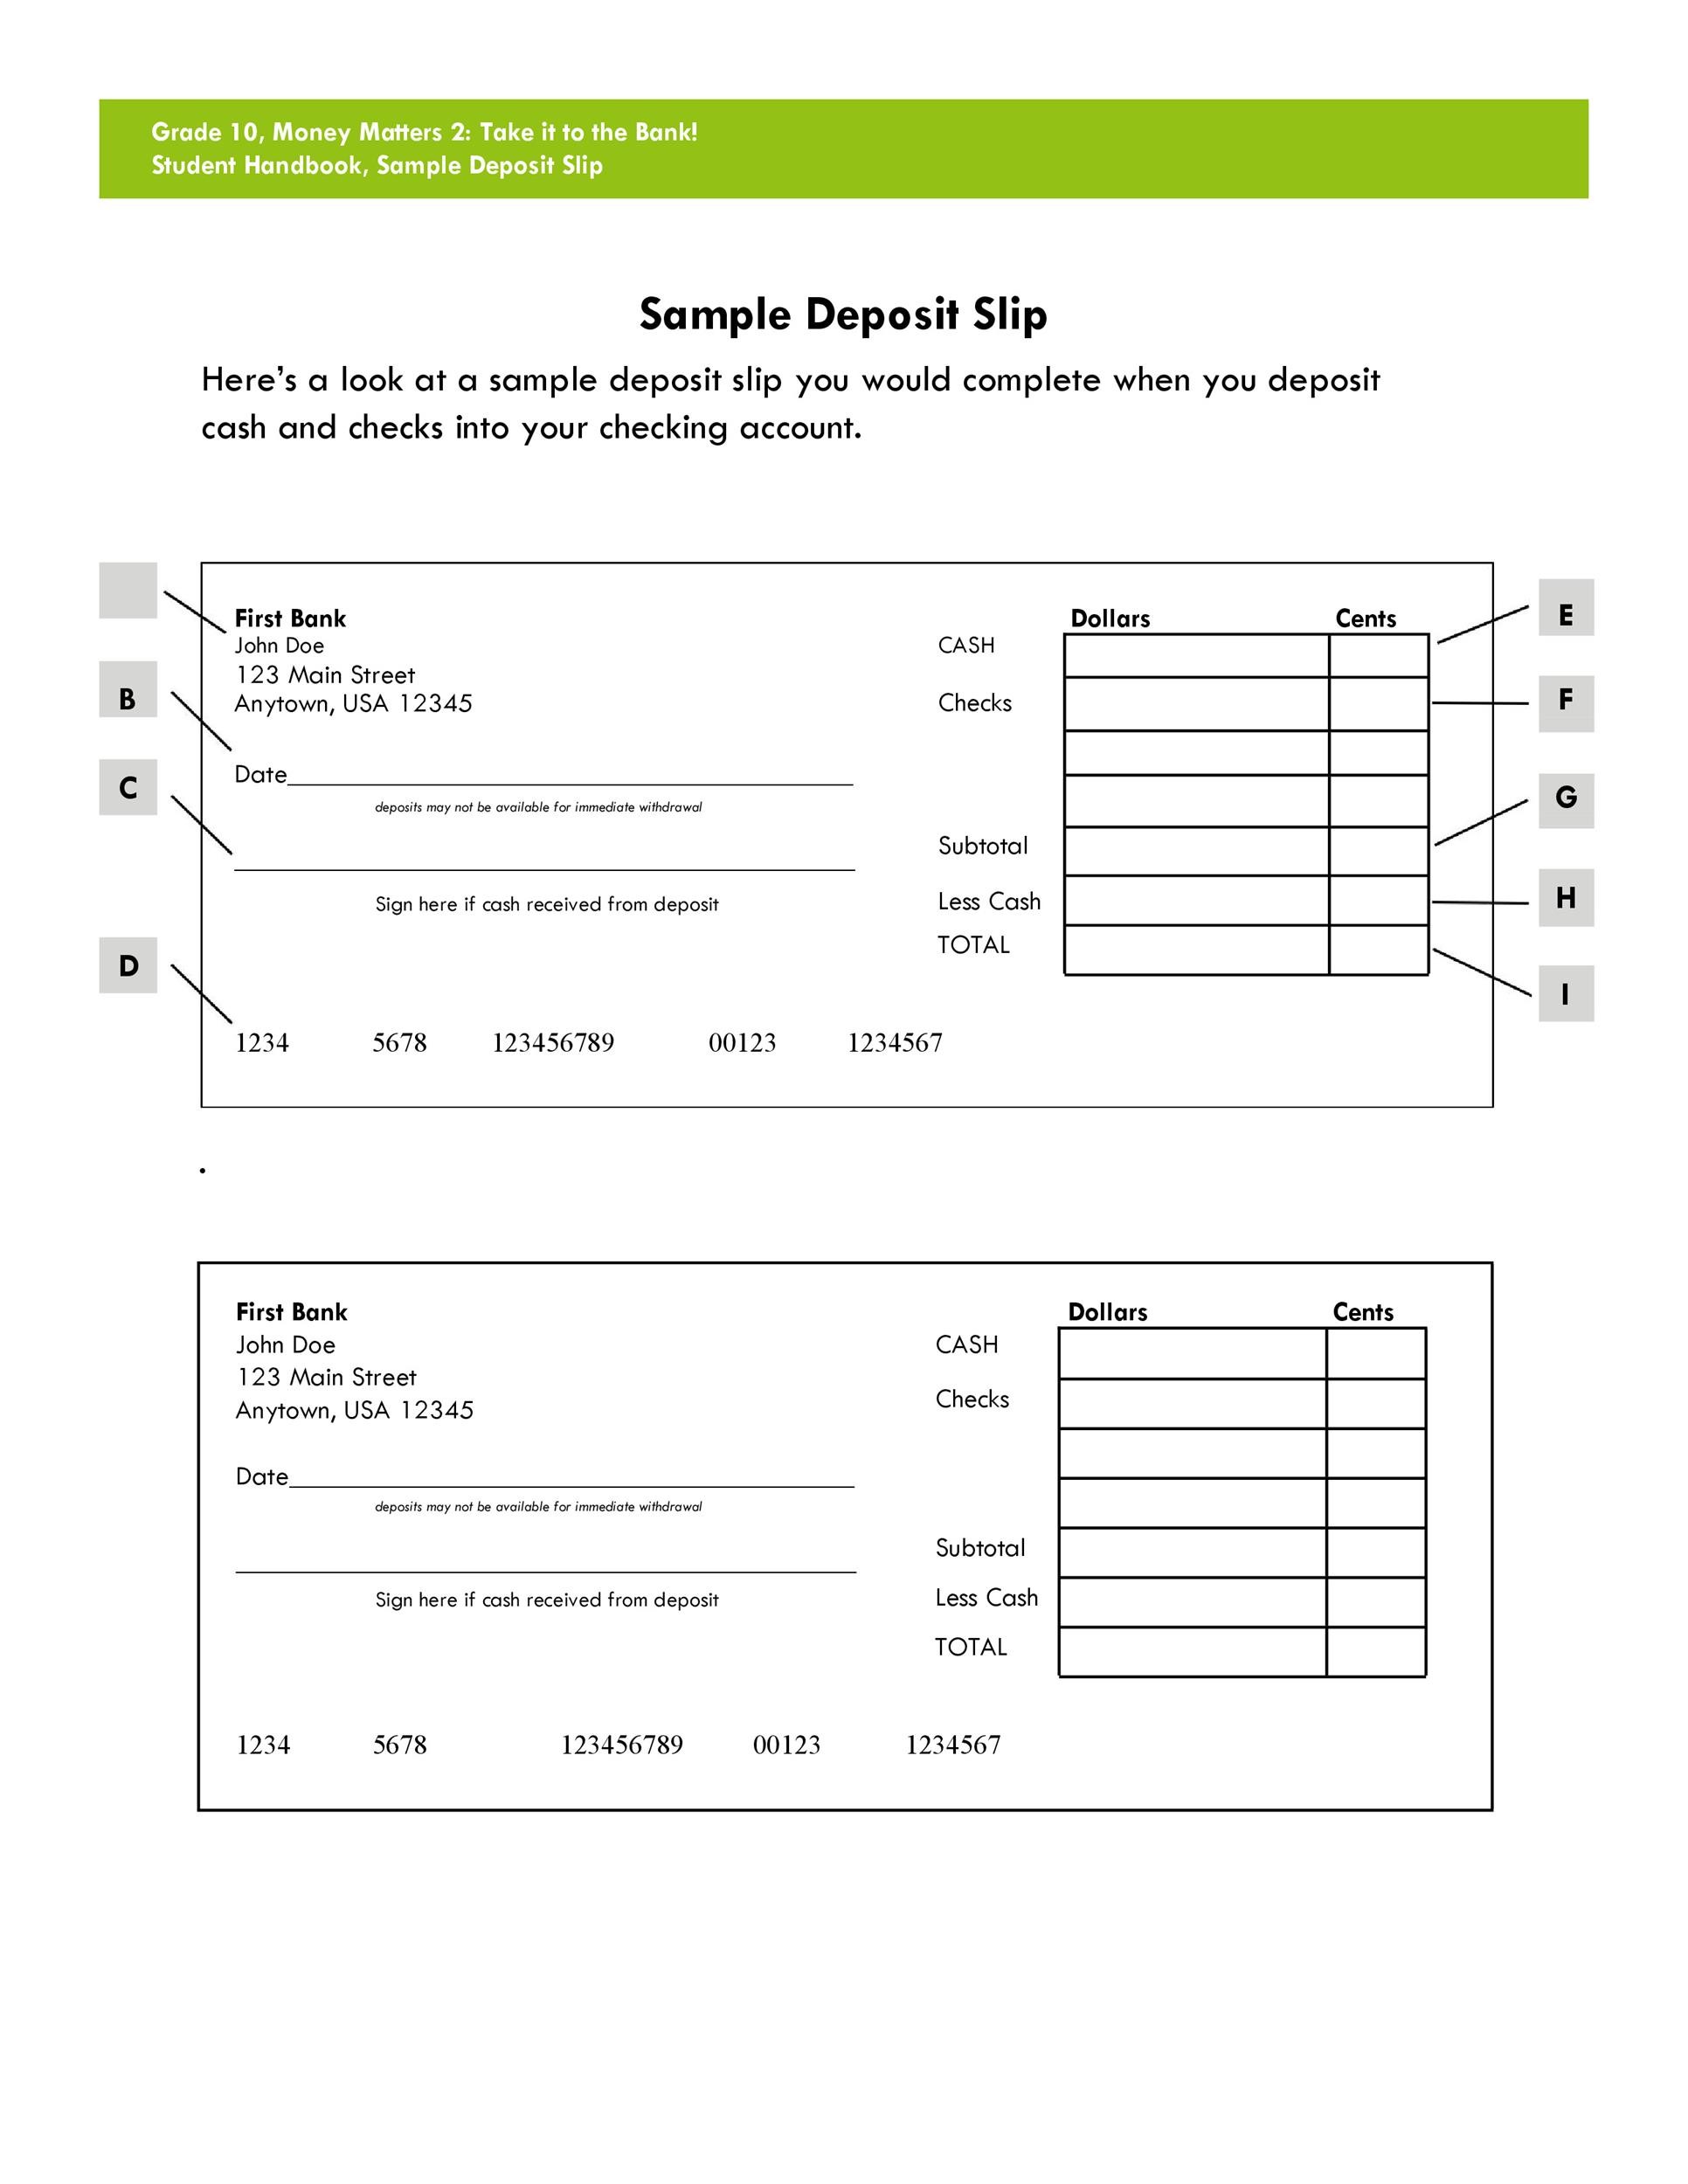 37 Bank Deposit Slip Templates & Examples ᐅ TemplateLab